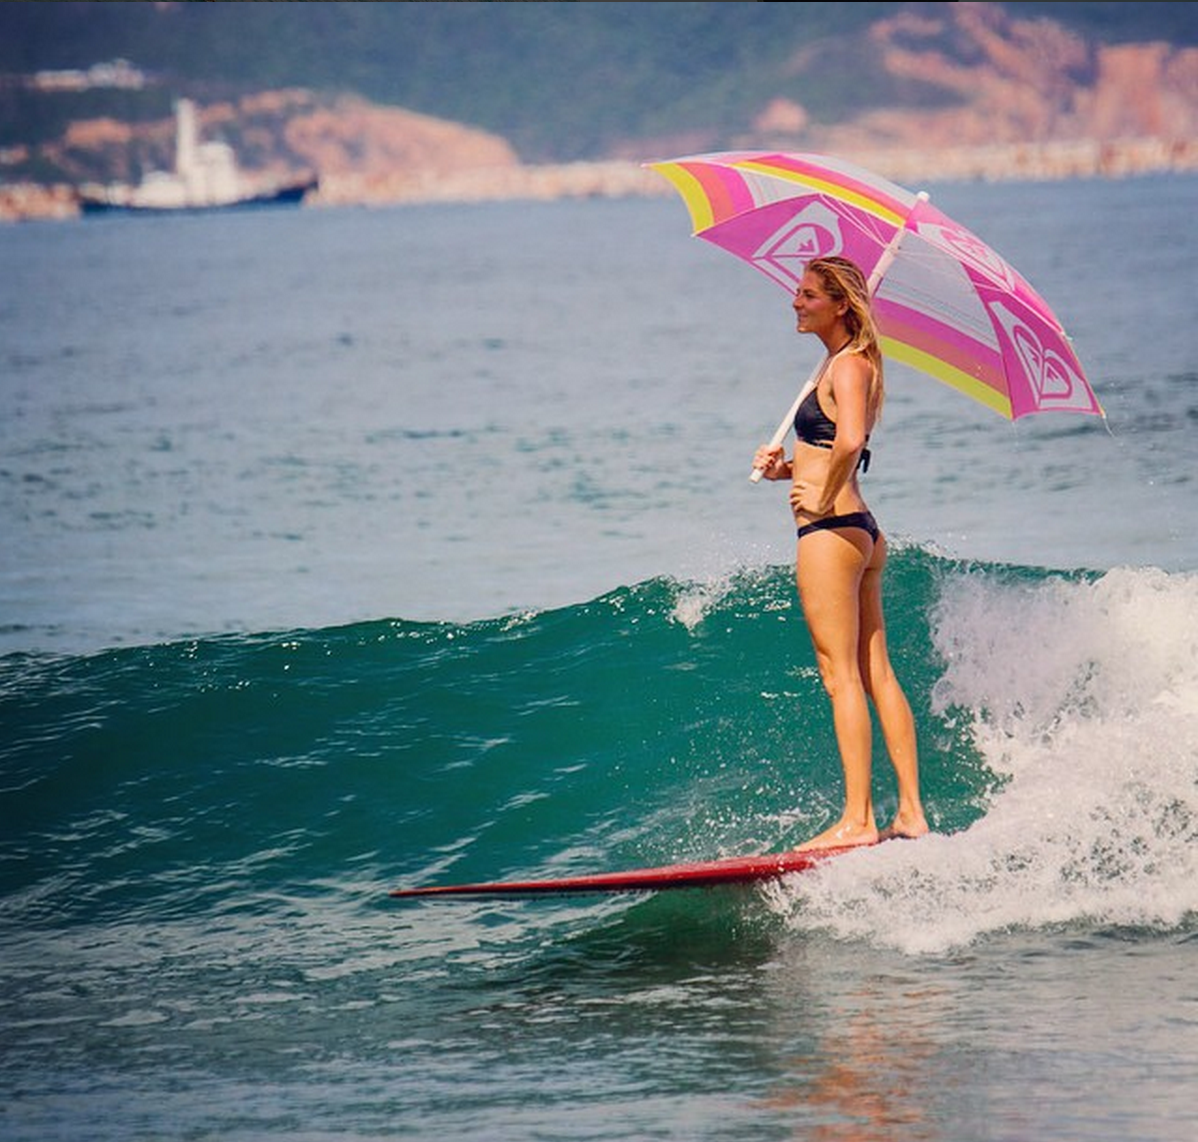 Stephanie Gilmore surfing with umbrella